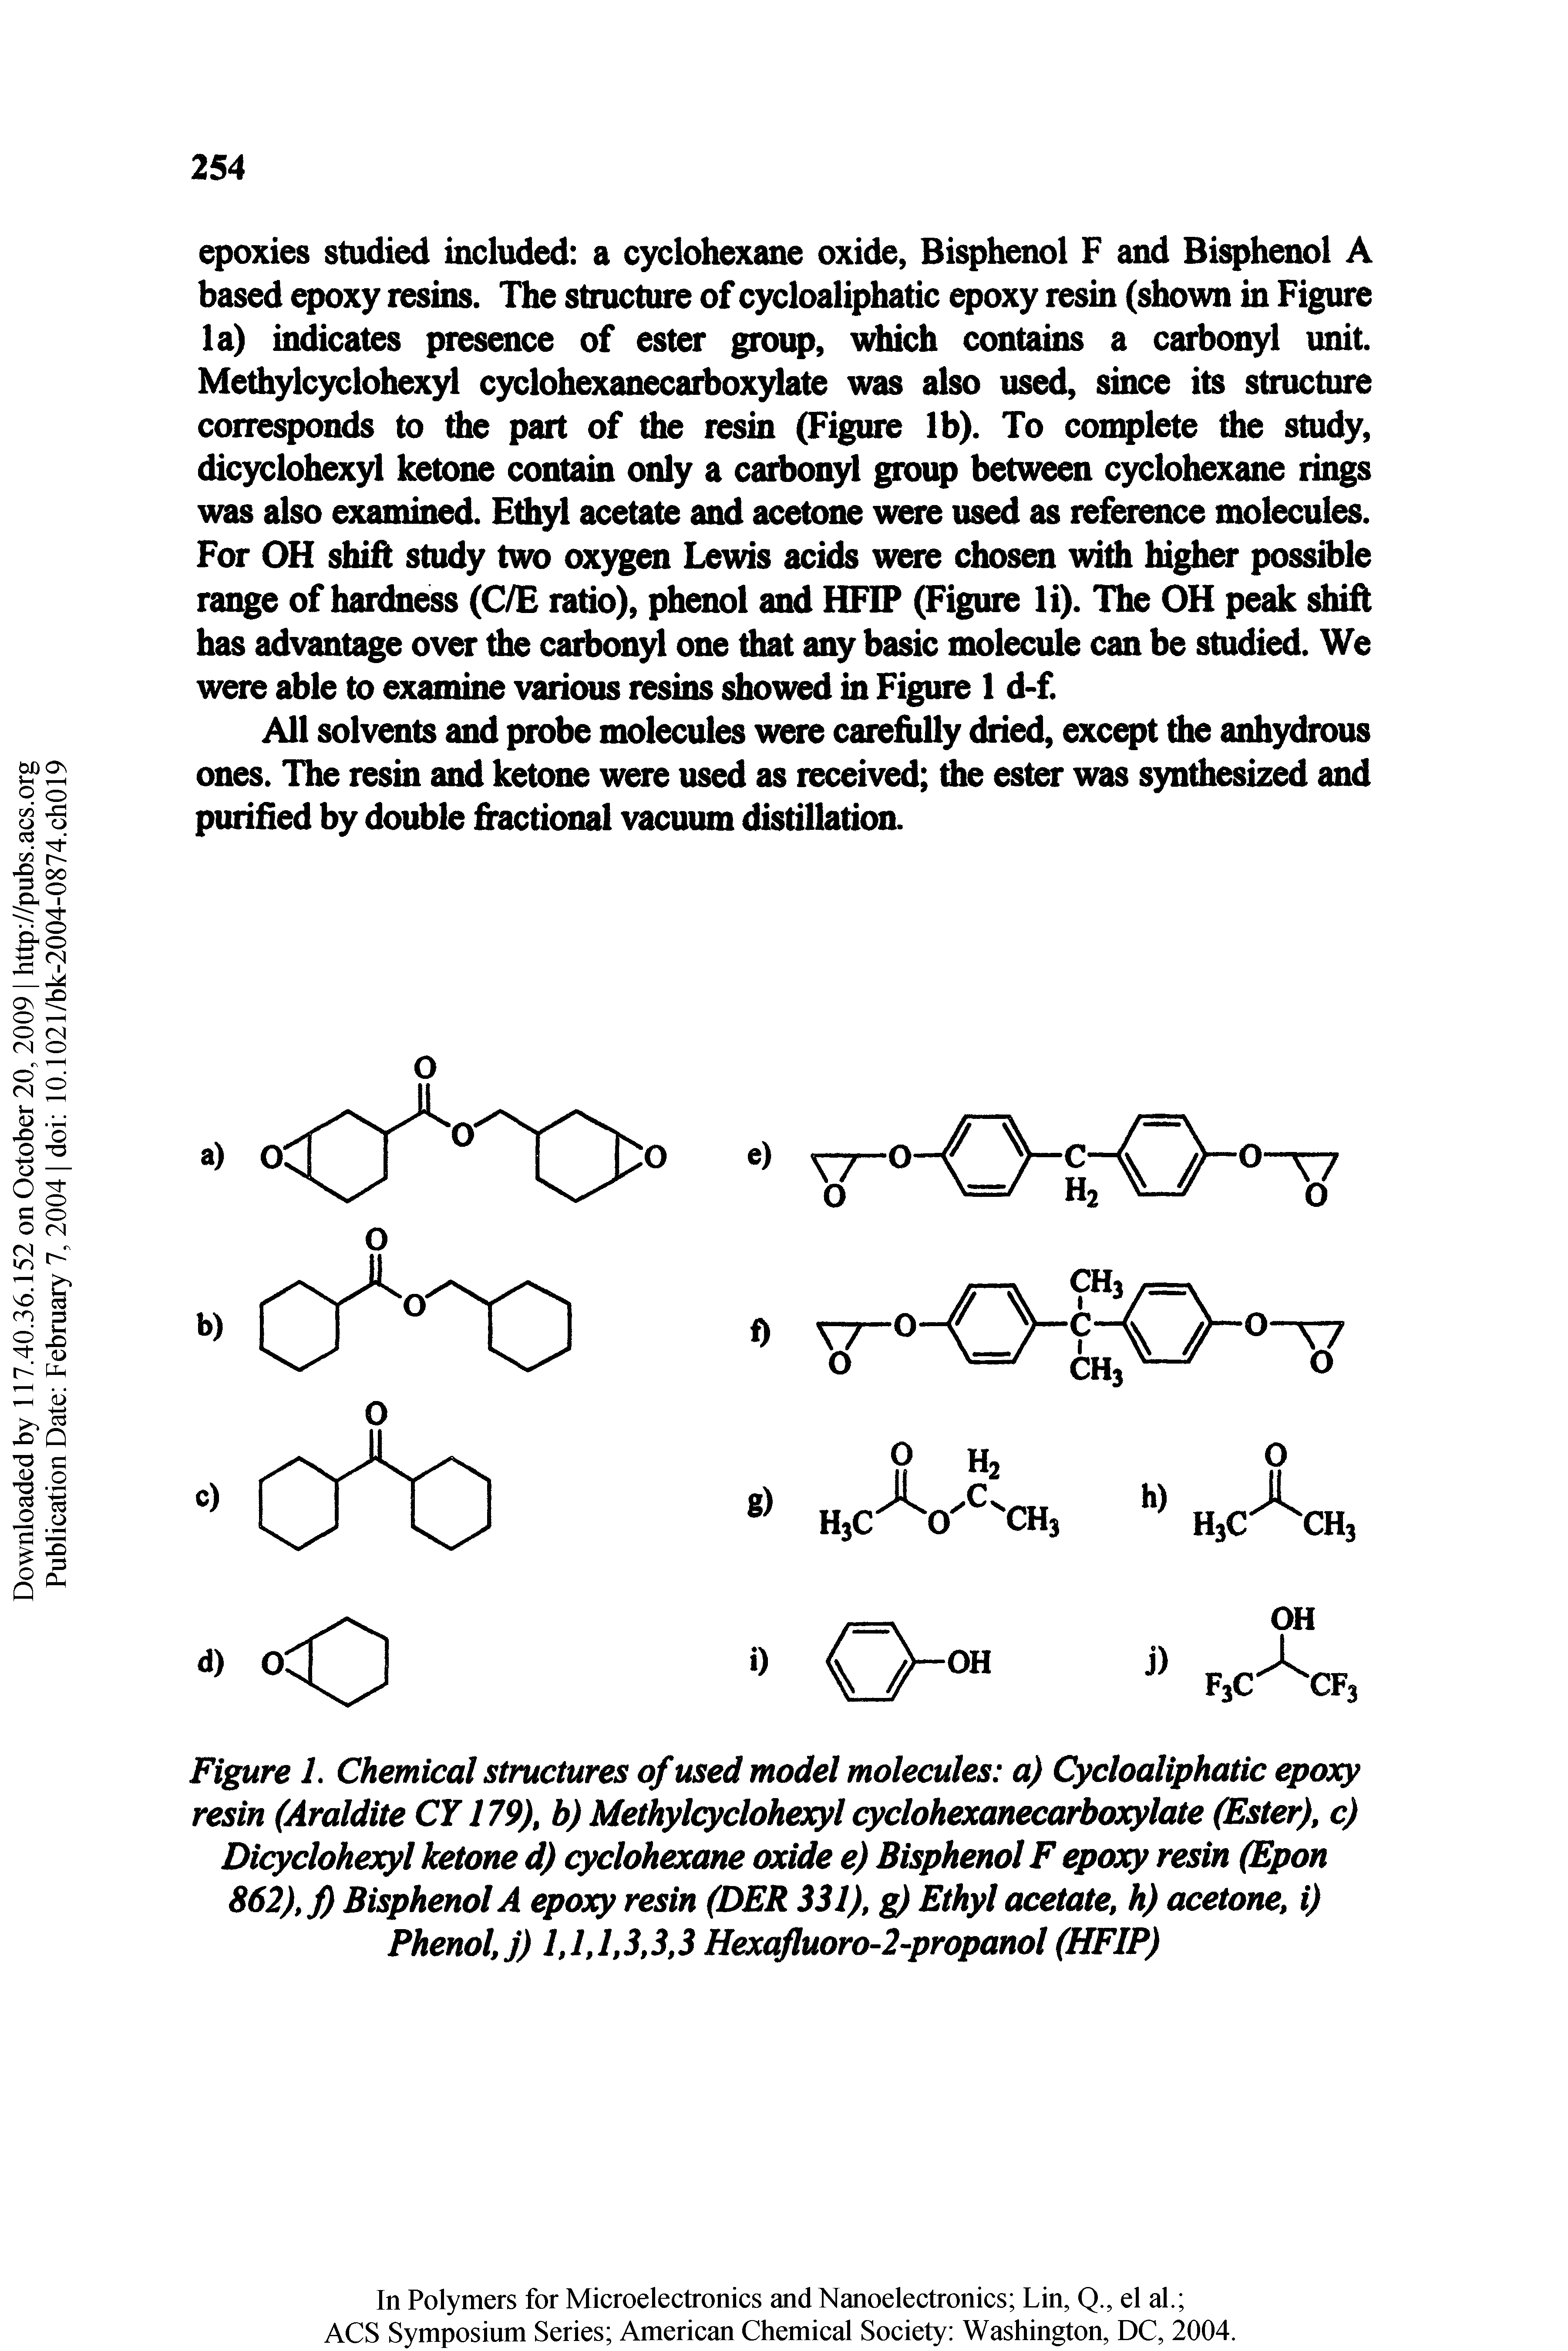 Figure 1. Chemical structures of used model molecules a) Cycloaliphatic epoxy resin (Araldite CY179), b) Methylcyclohexyl cyclohexanecarboxylate (Ester), c) Dicyclohexyl ketone d) cyclohexane oxide e) Bisphenol F epoxy resin (Epon 862), f) Bisphenol A epoxy resin (DER 331), g) Ethyl acetate, h) acetone, i) Phenol, j) 1,1,1,3,3,3 Hexafluoro-2-propanol (HFIP)...